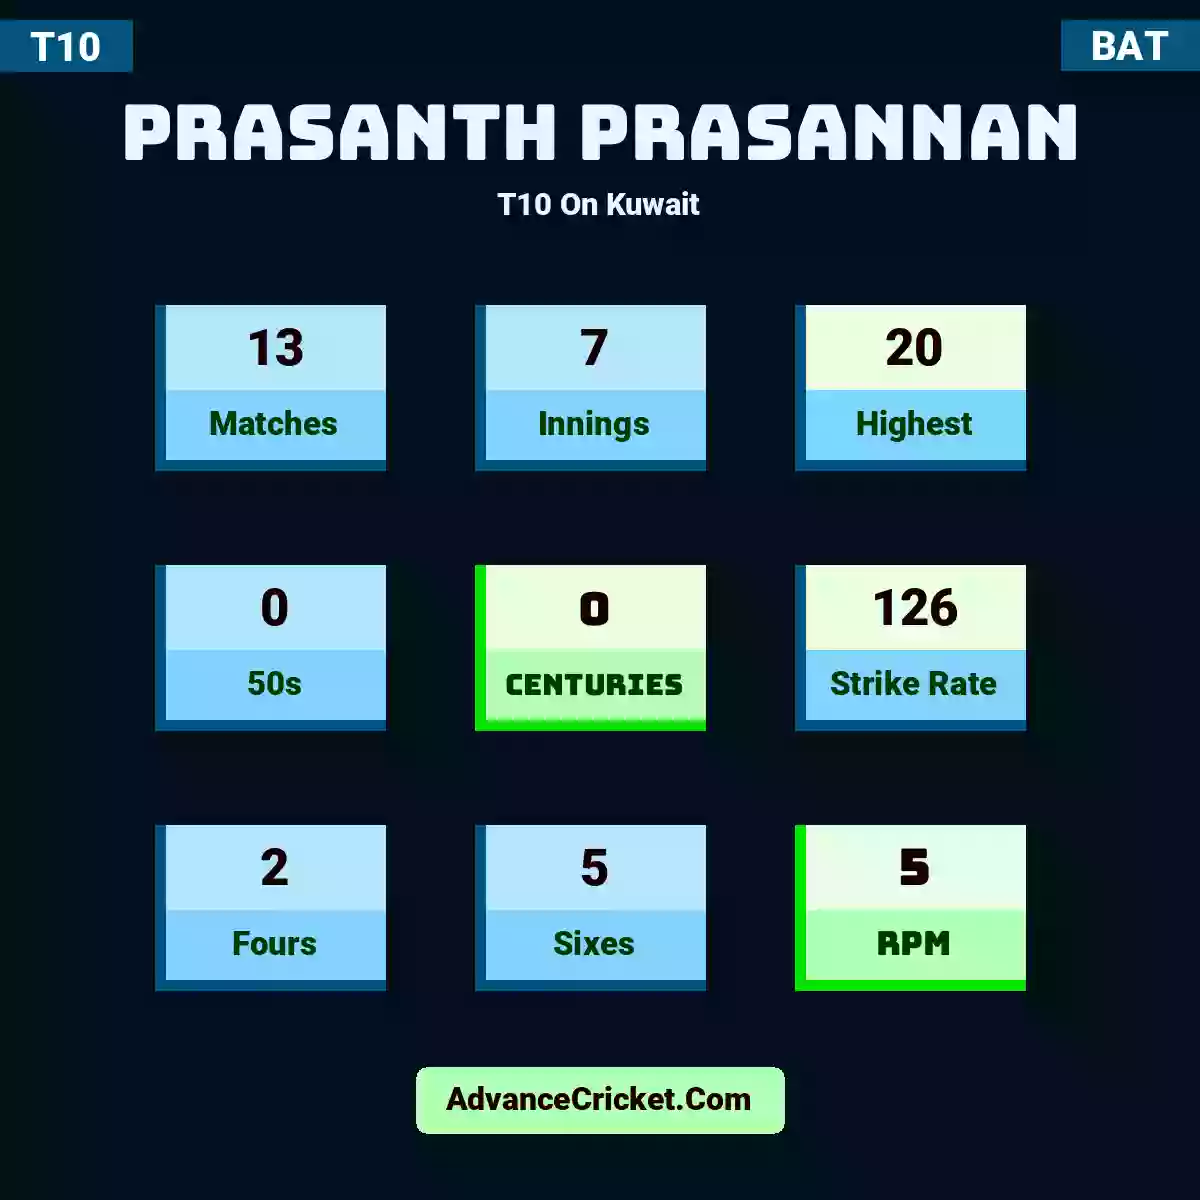 Prasanth Prasannan T10  On Kuwait, Prasanth Prasannan played 13 matches, scored 20 runs as highest, 0 half-centuries, and 0 centuries, with a strike rate of 126. P.Prasannan hit 2 fours and 5 sixes, with an RPM of 5.